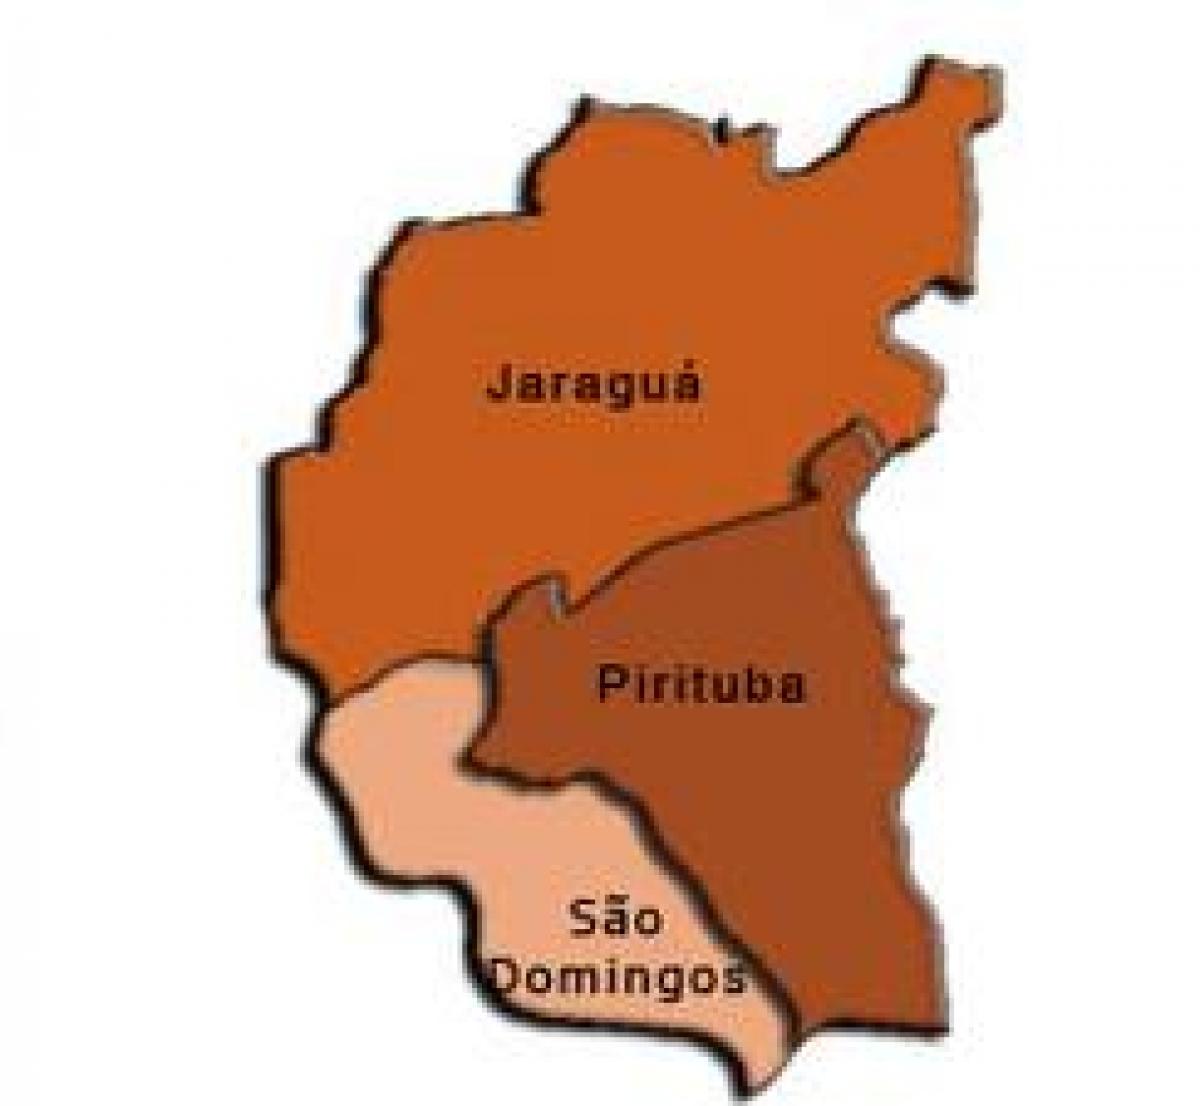 Peta Pirituba-Jaraguá sub-prefecture